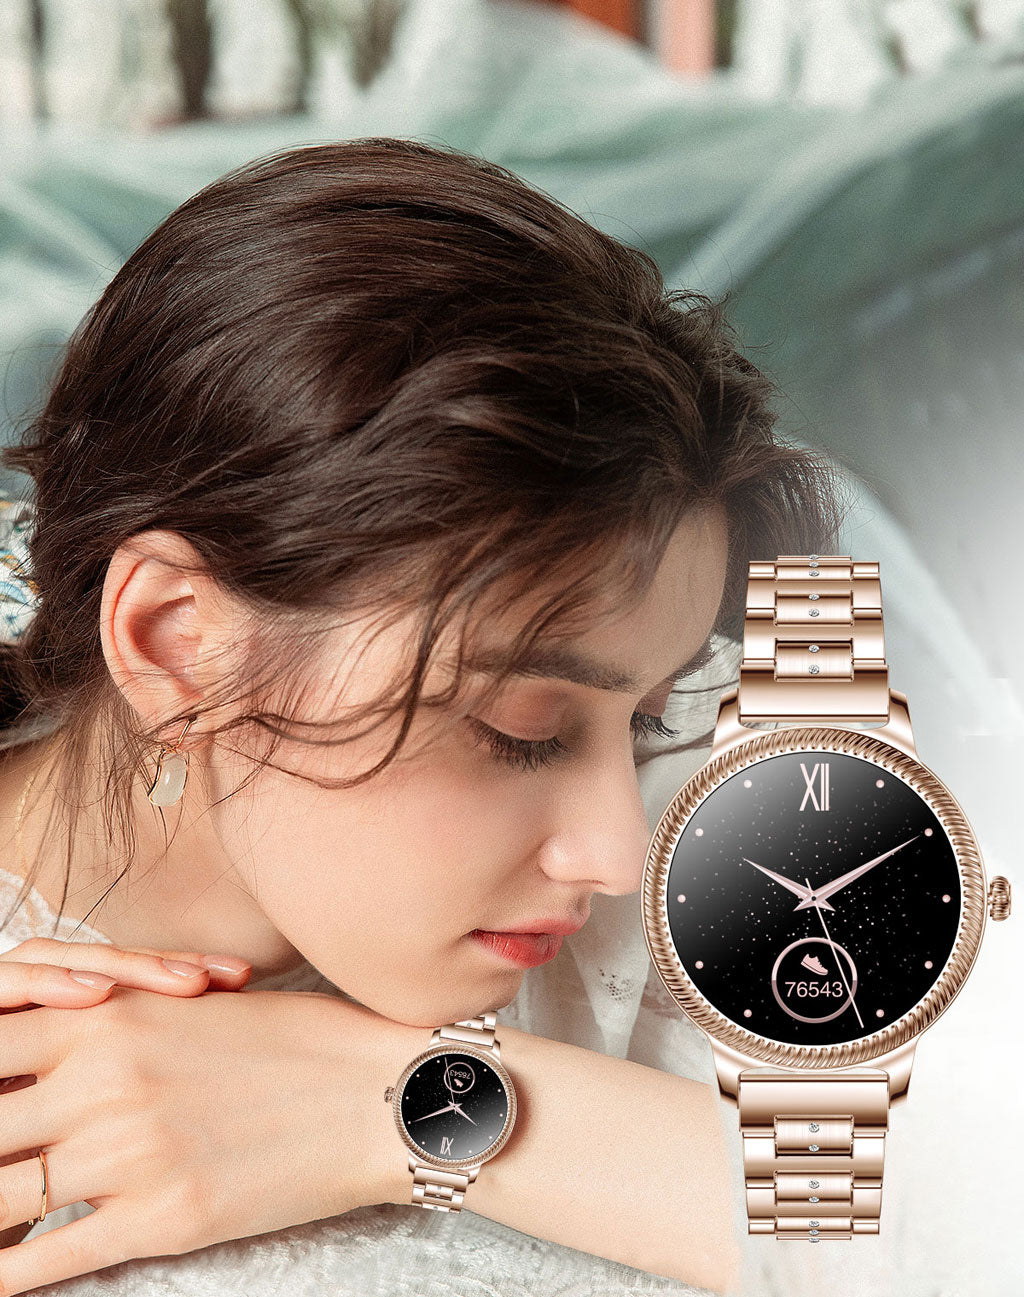 a-smart-watch-designed-for-women